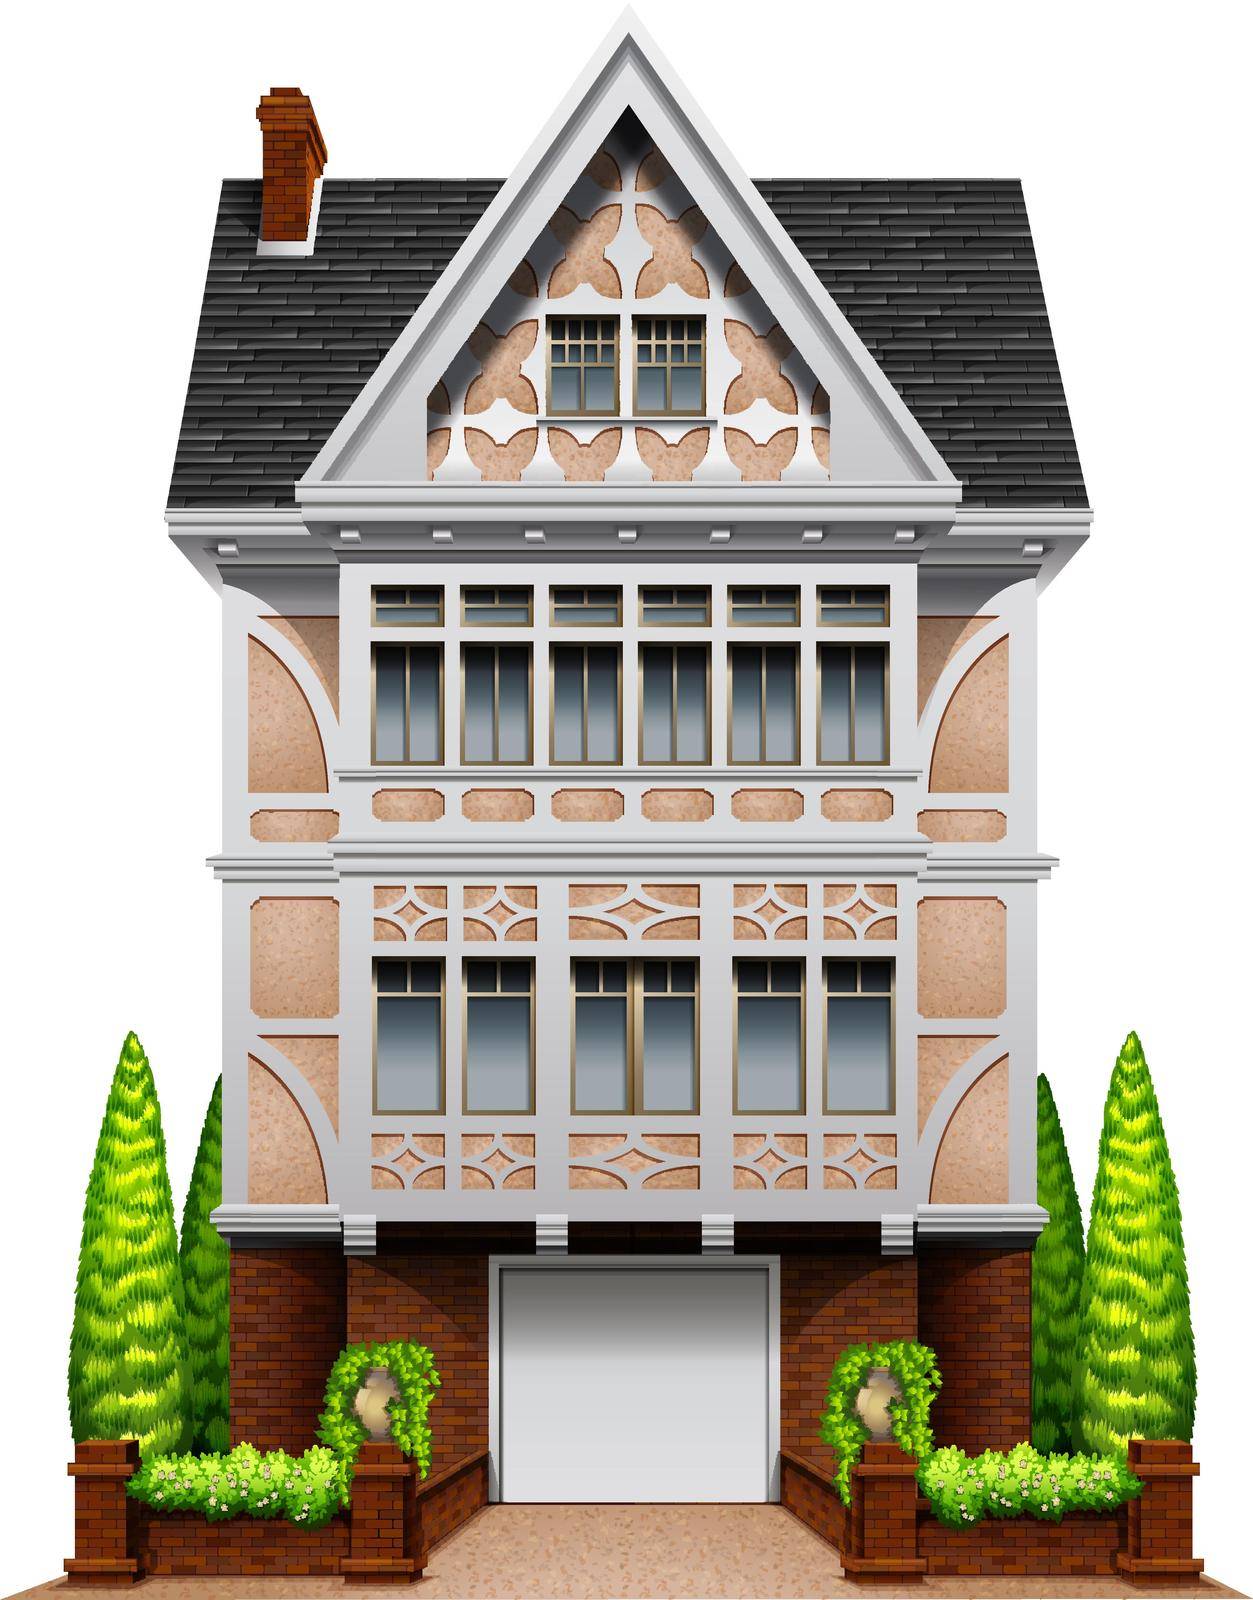 Illustration of a single house